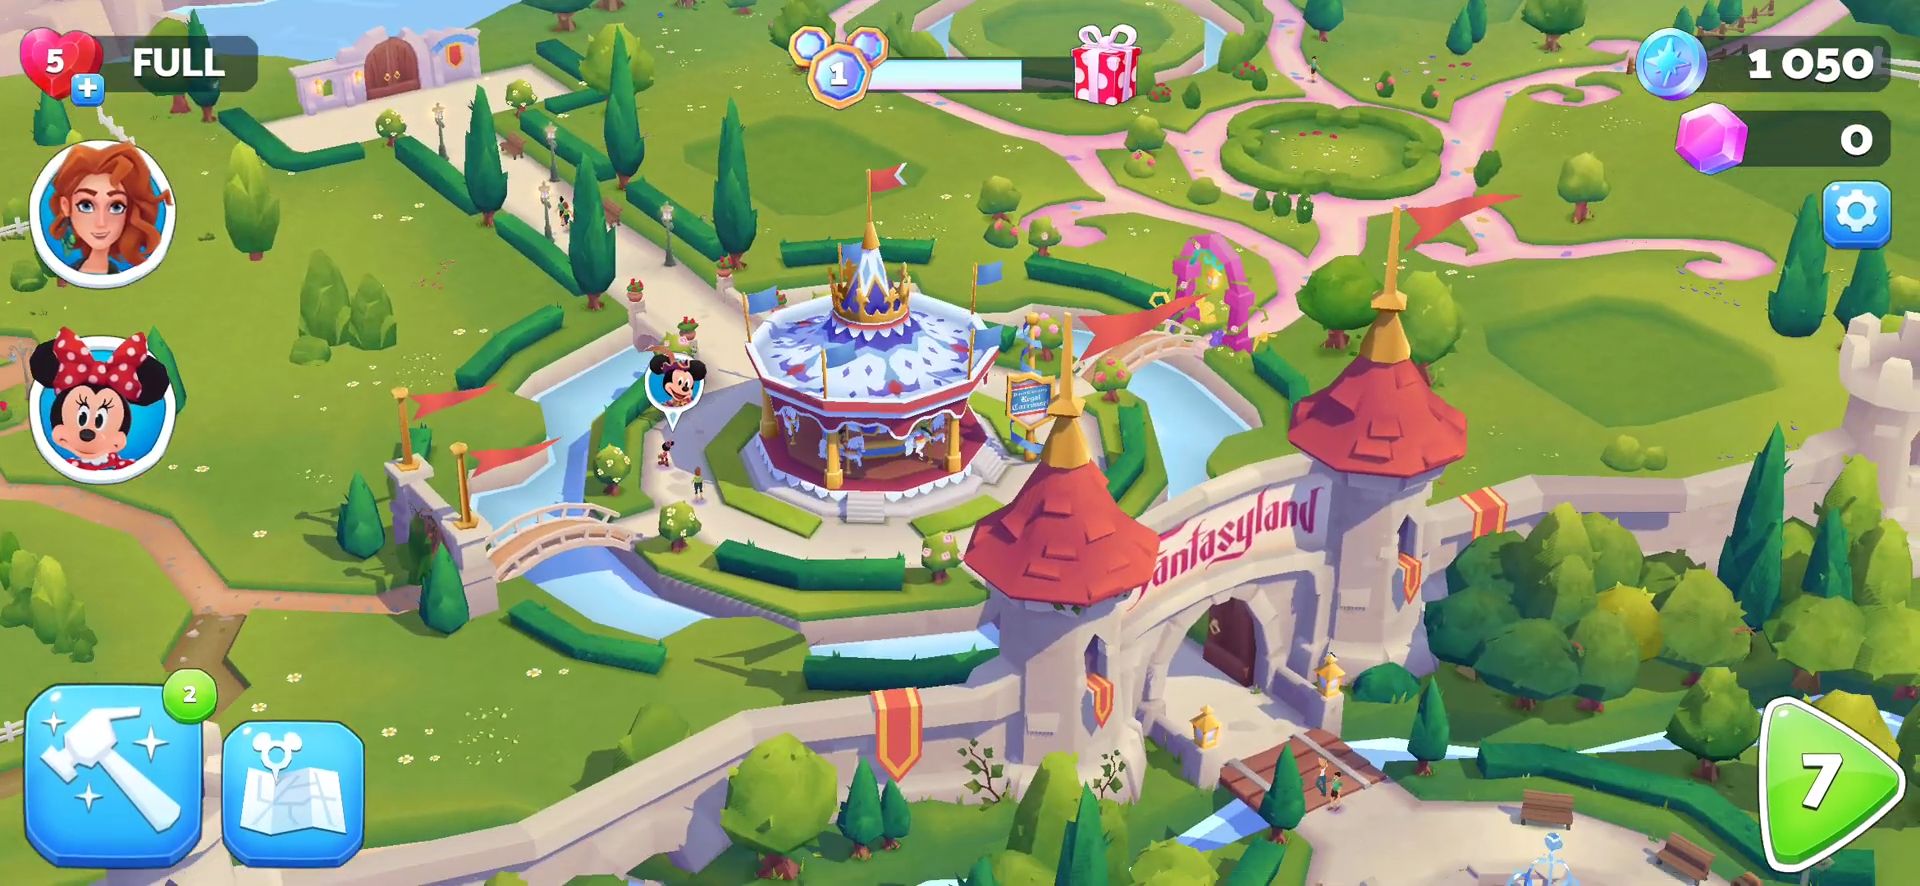 Disney Wonderful Worlds - Android game screenshots.